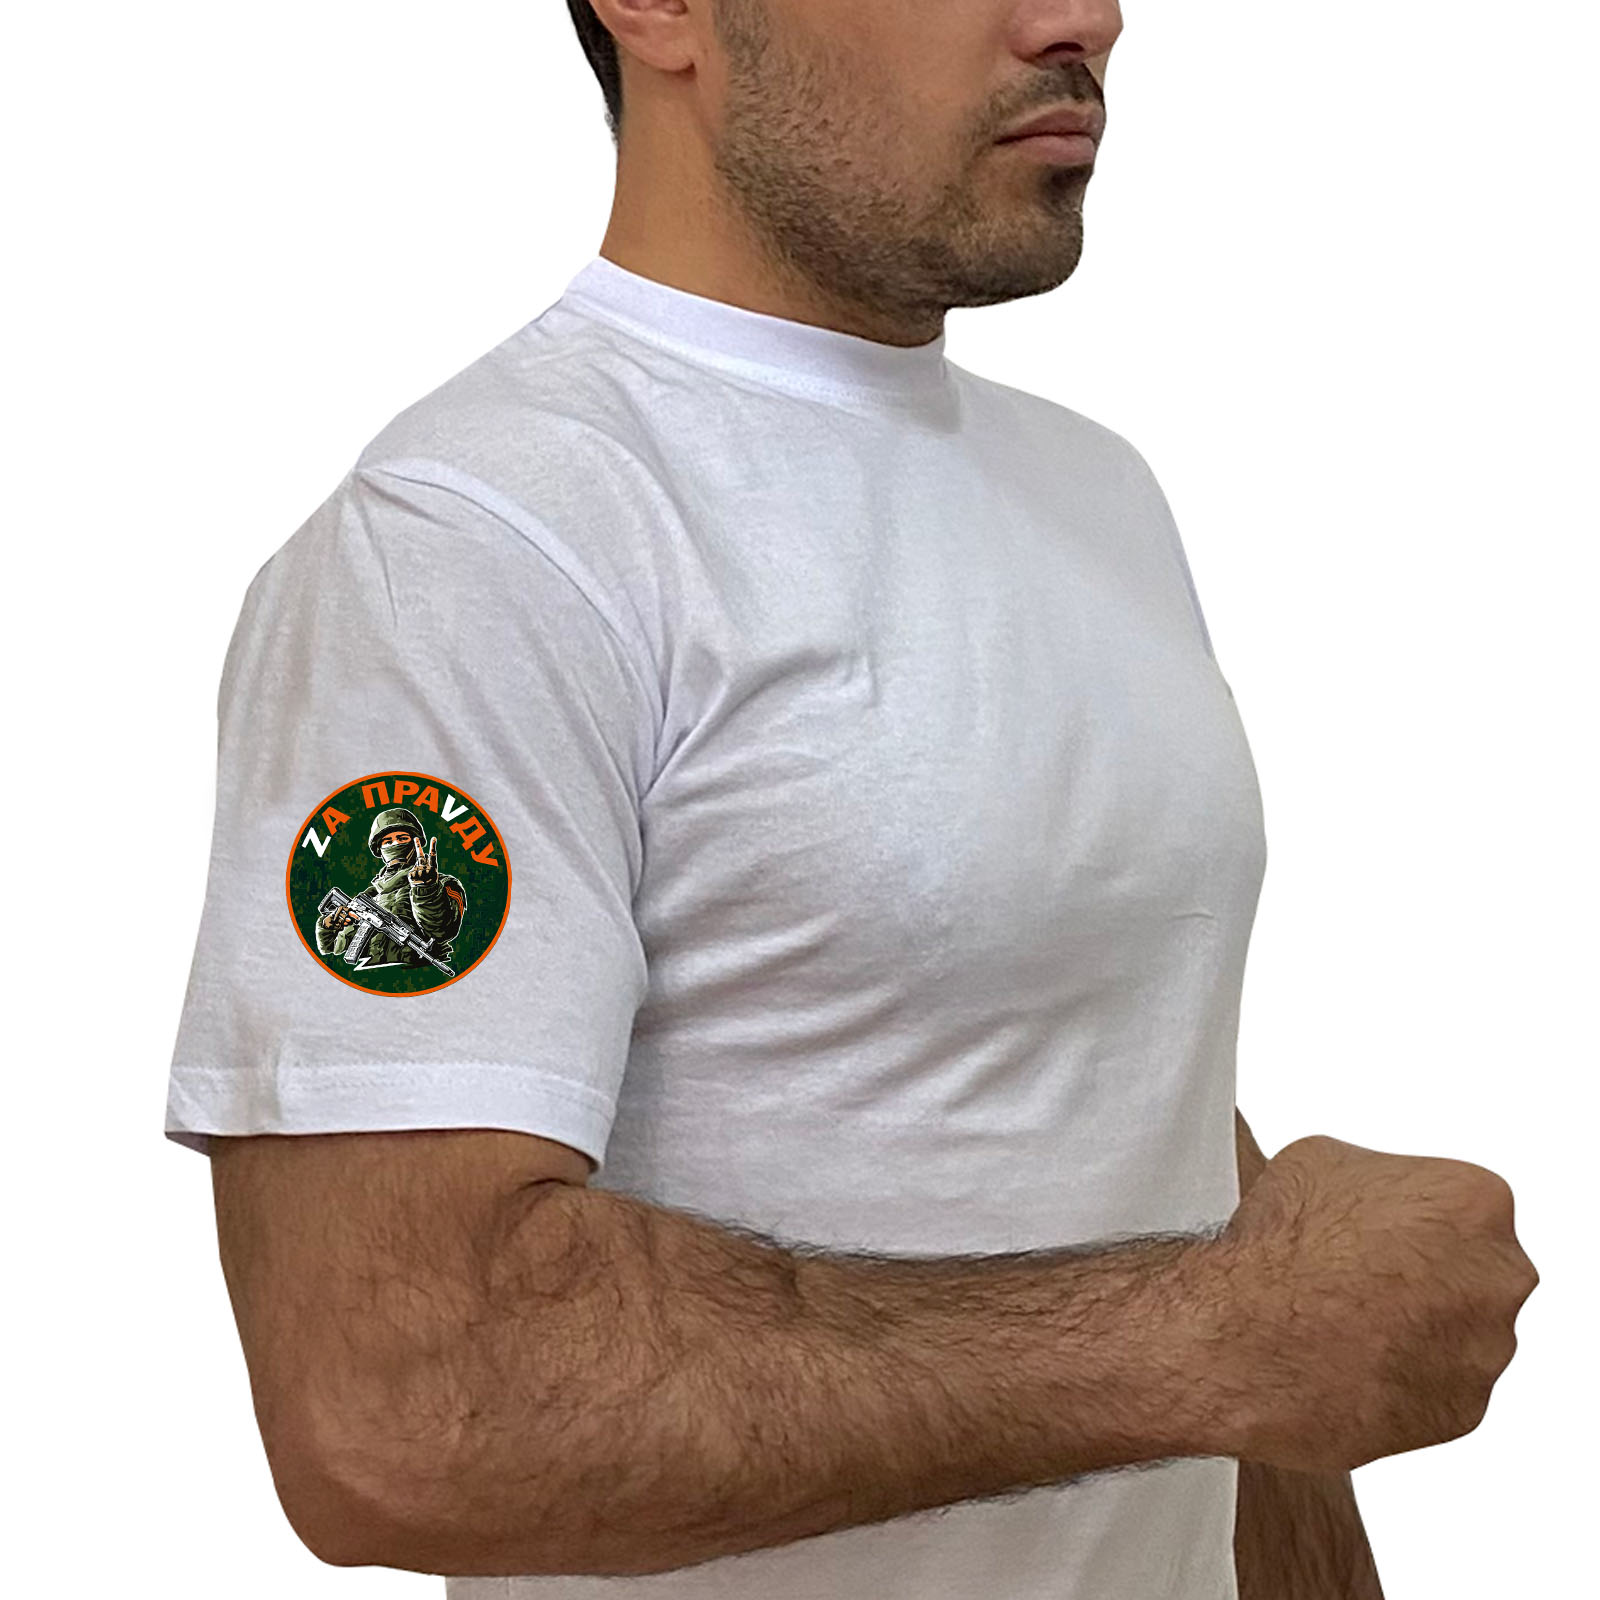 Купить белую футболку с трансфером "Zа праVду" на рукаве